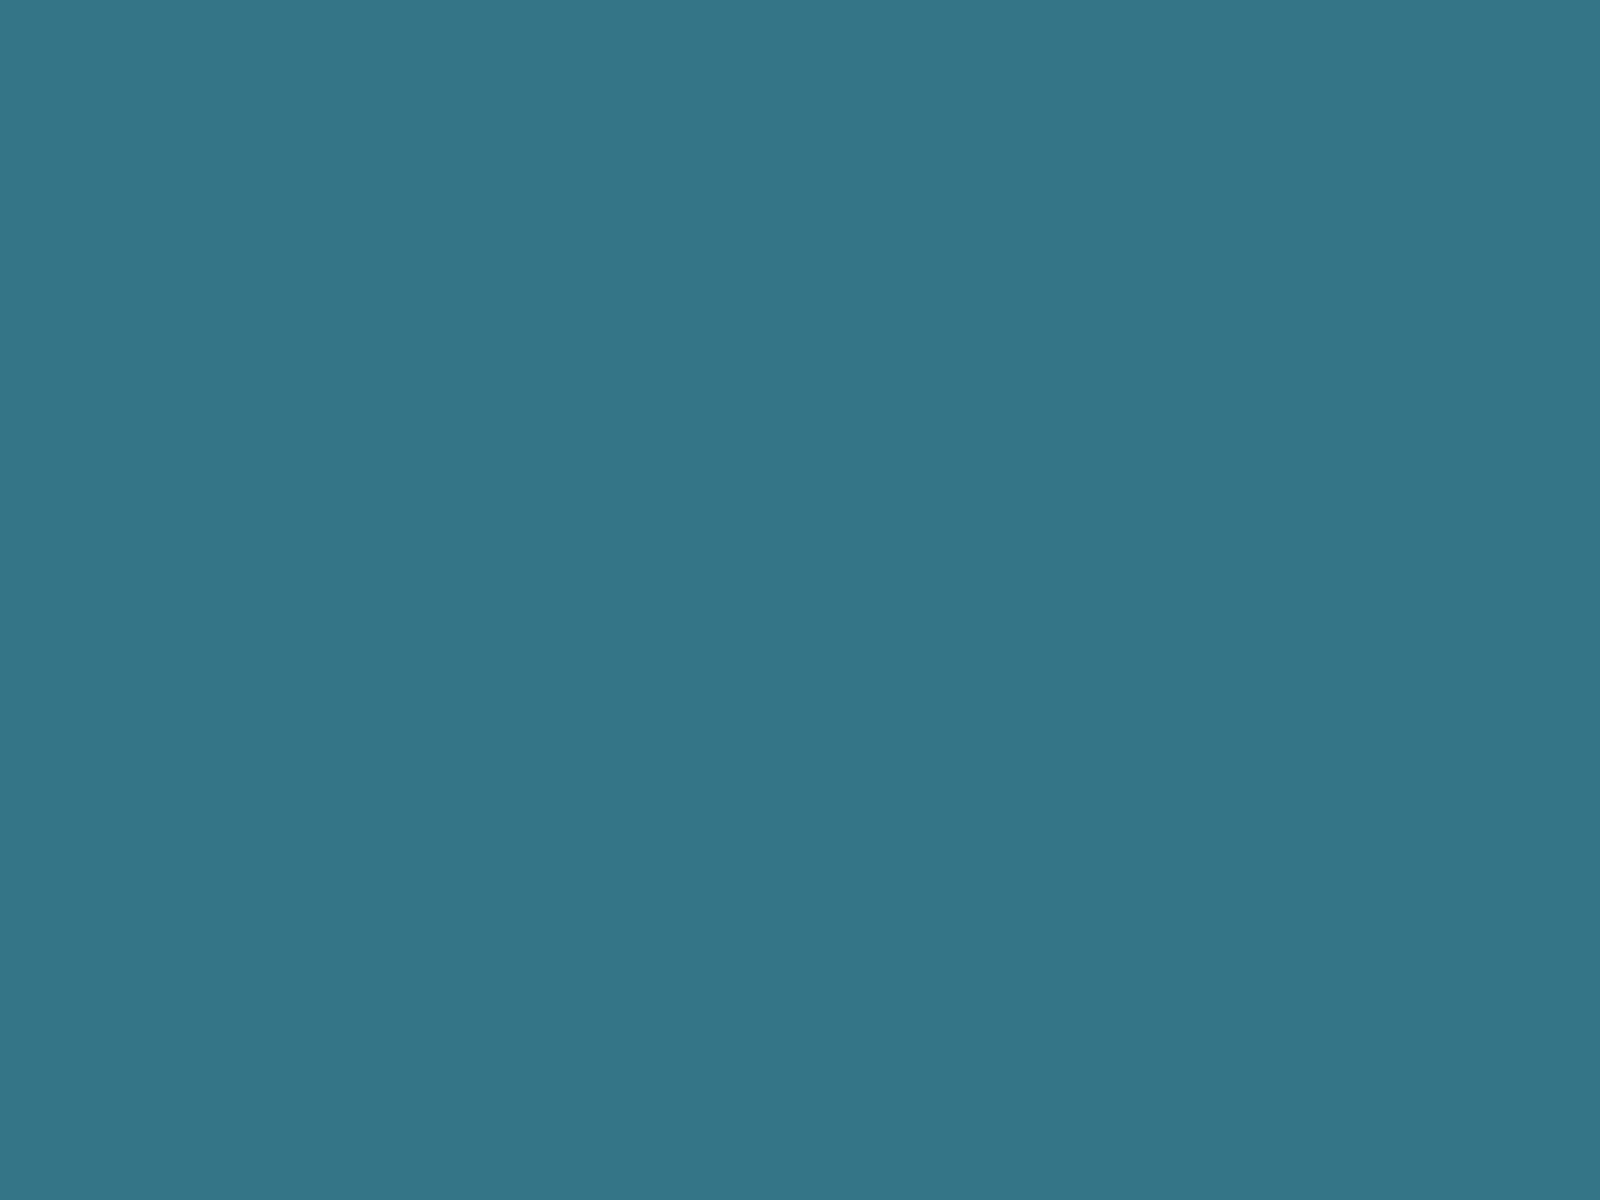 1600x1200 Teal Blue Solid Color Background